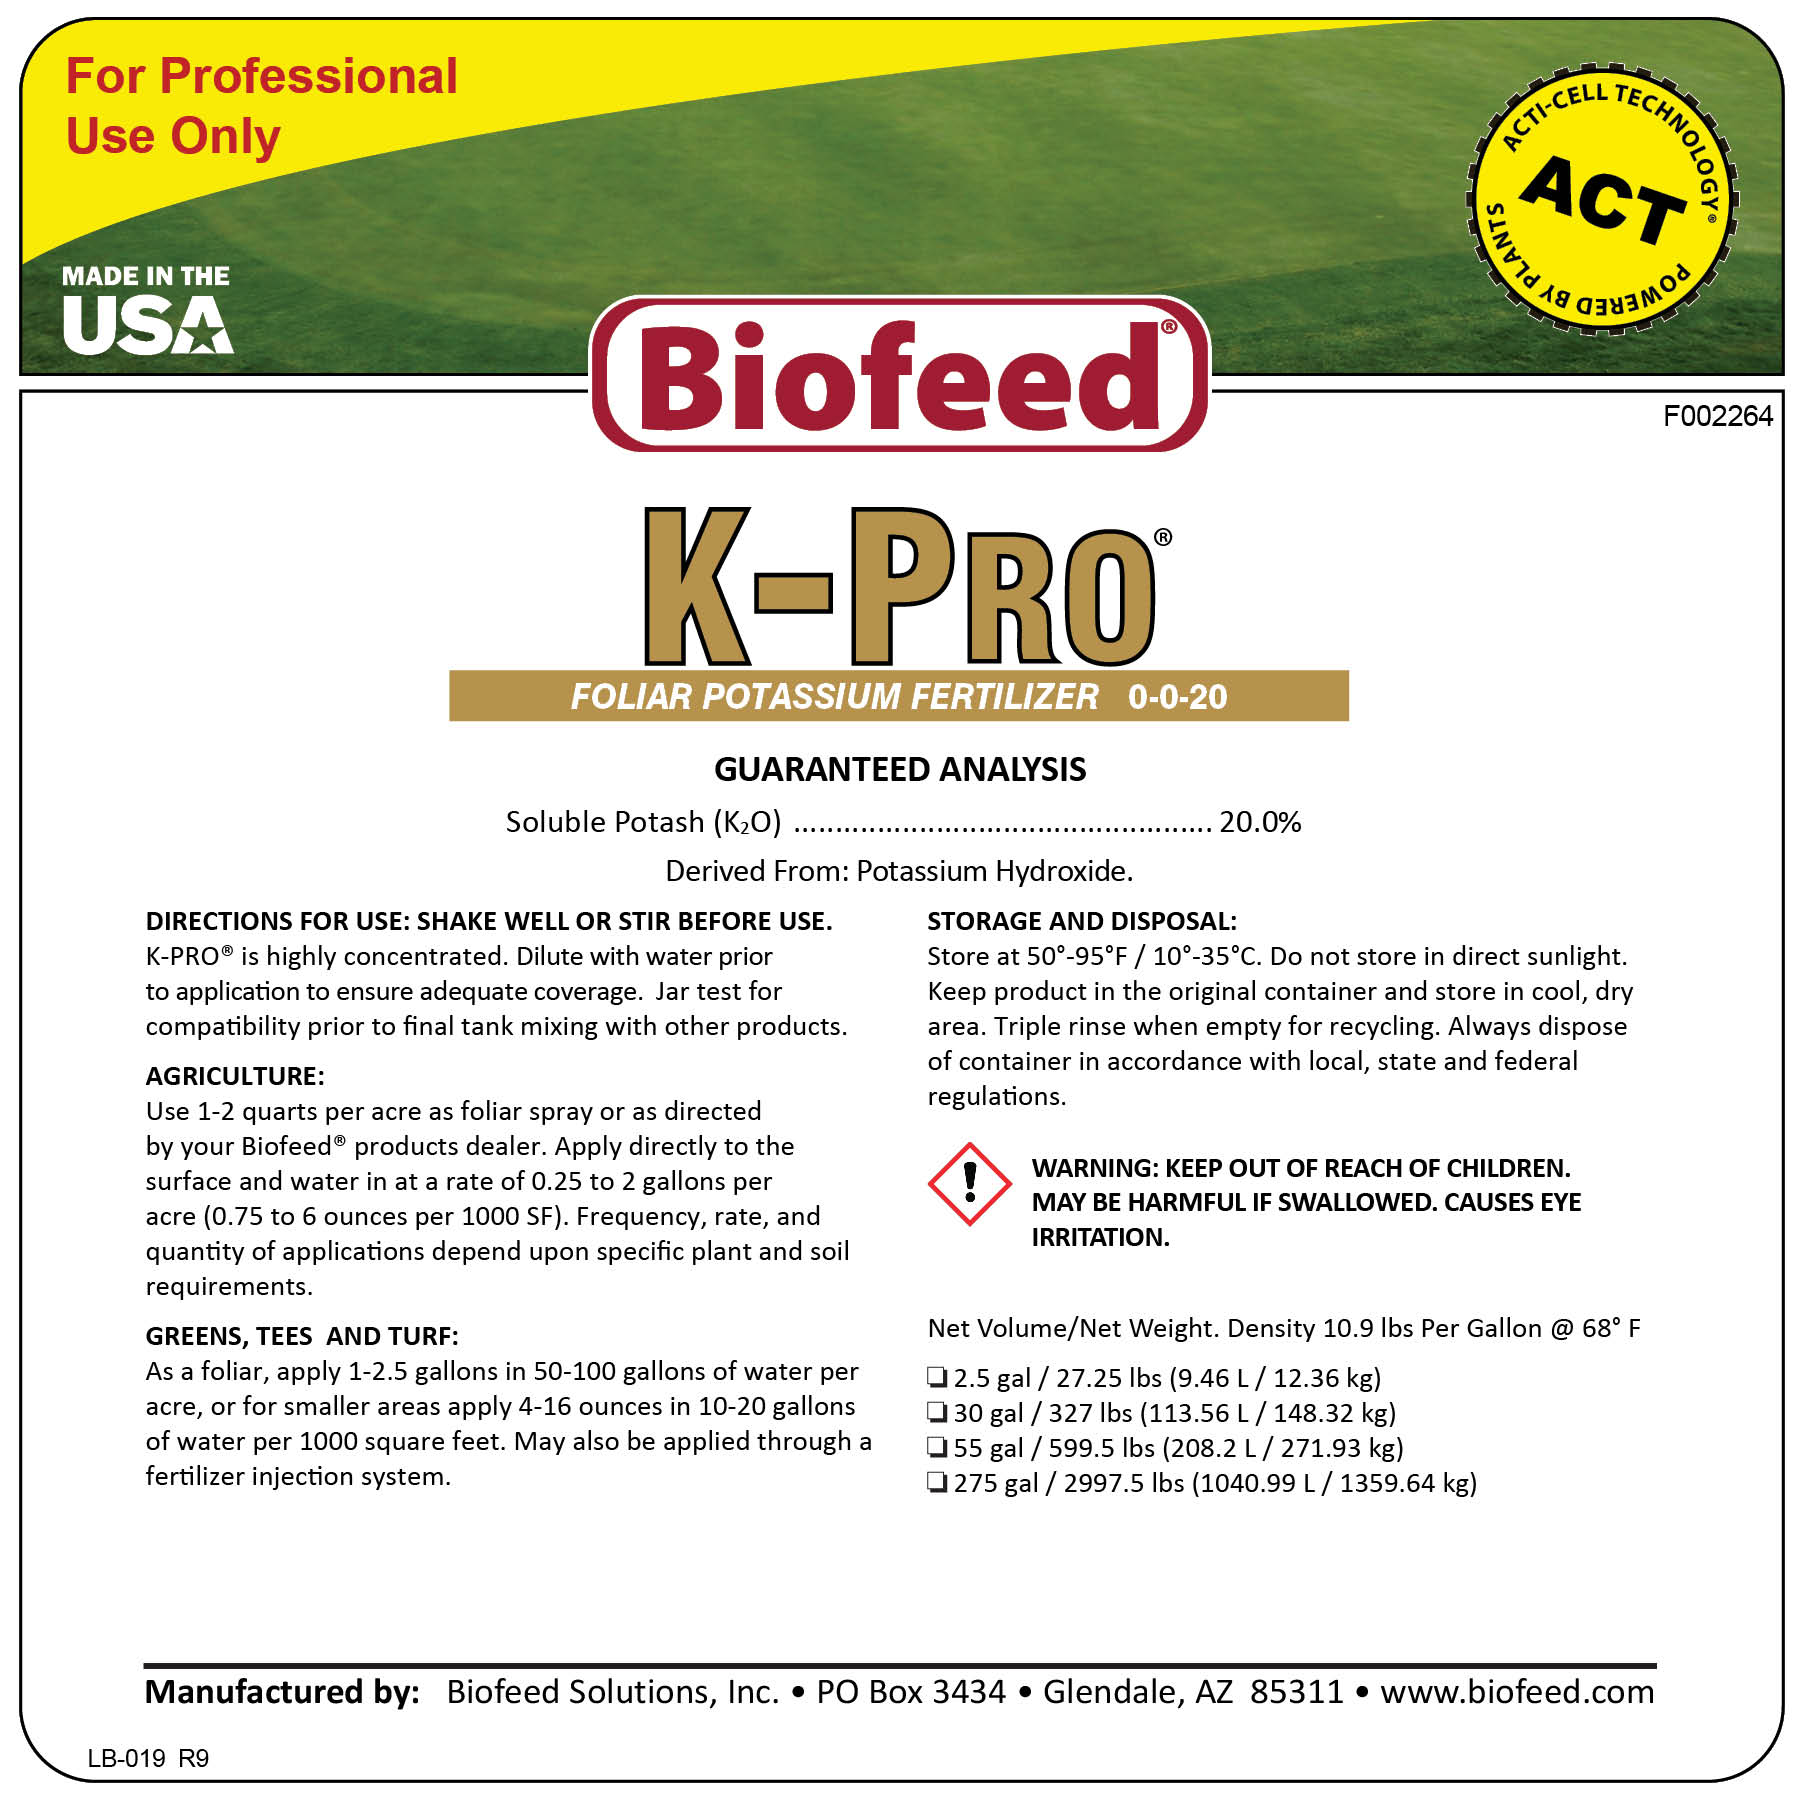 K-PRO Foliar Potassium Fertilizer